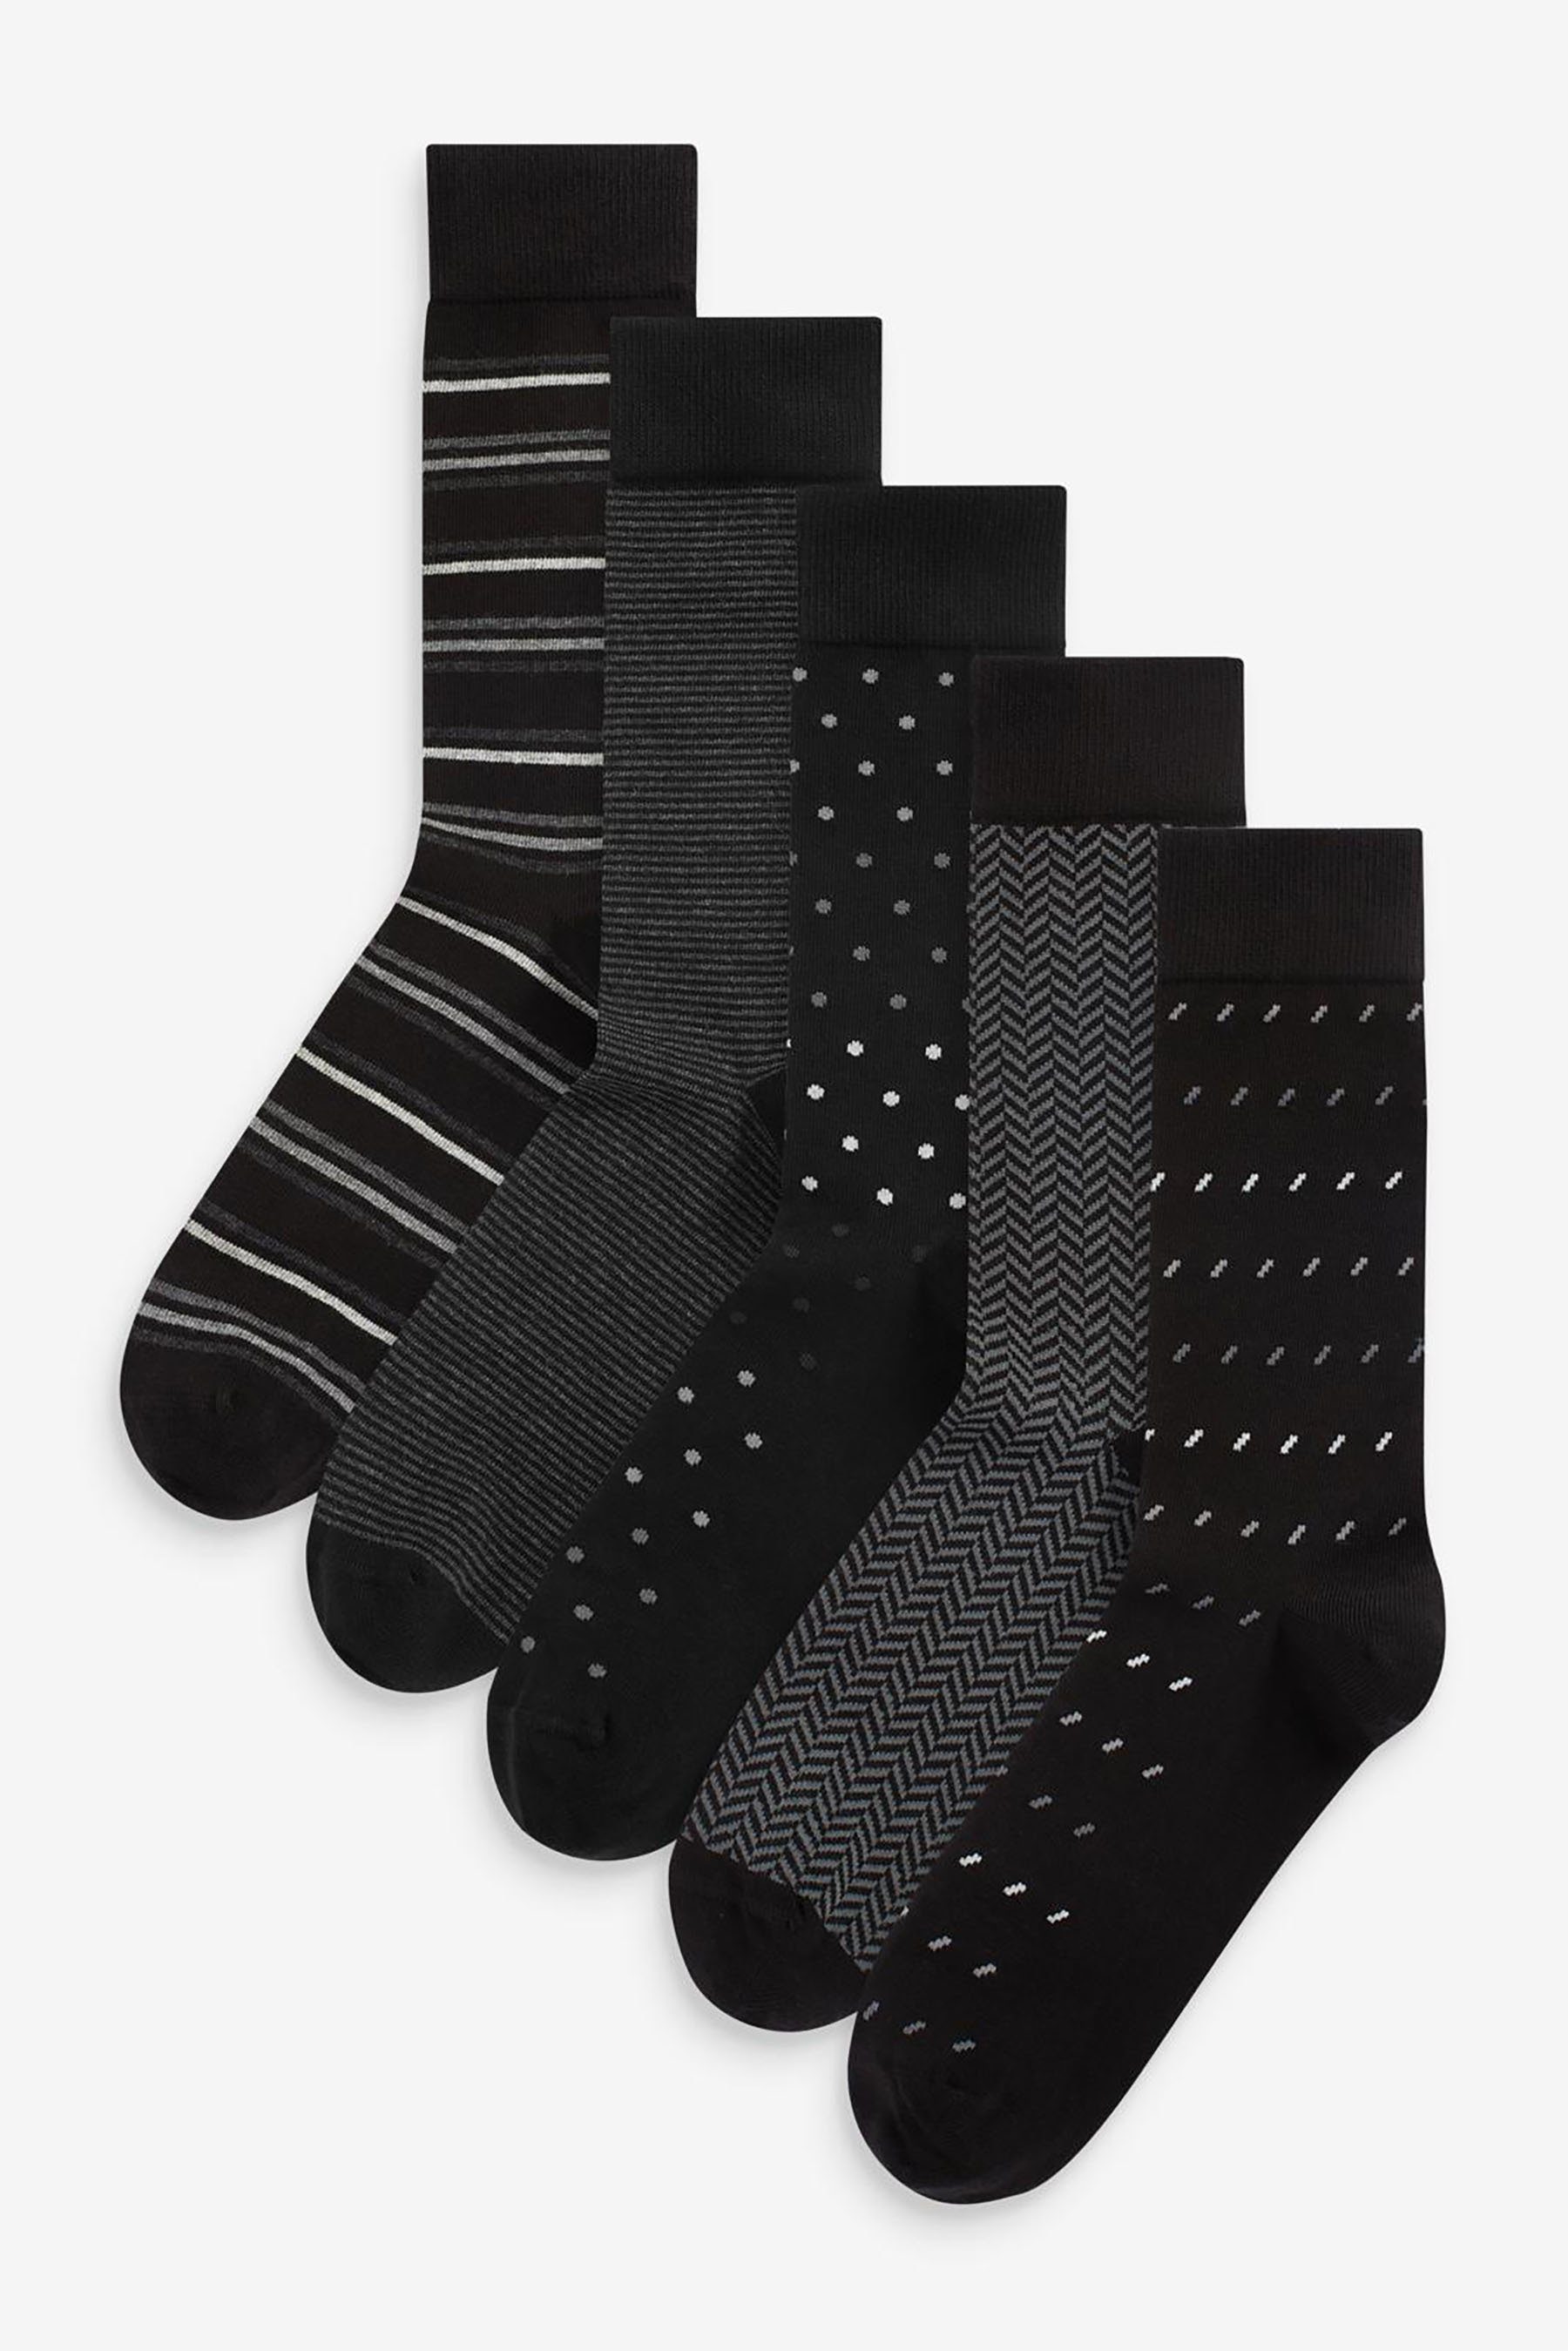 Next Kurzsocken Gemusterte Socken, 5er-Pack (5-Paar) Black/Grey Mix